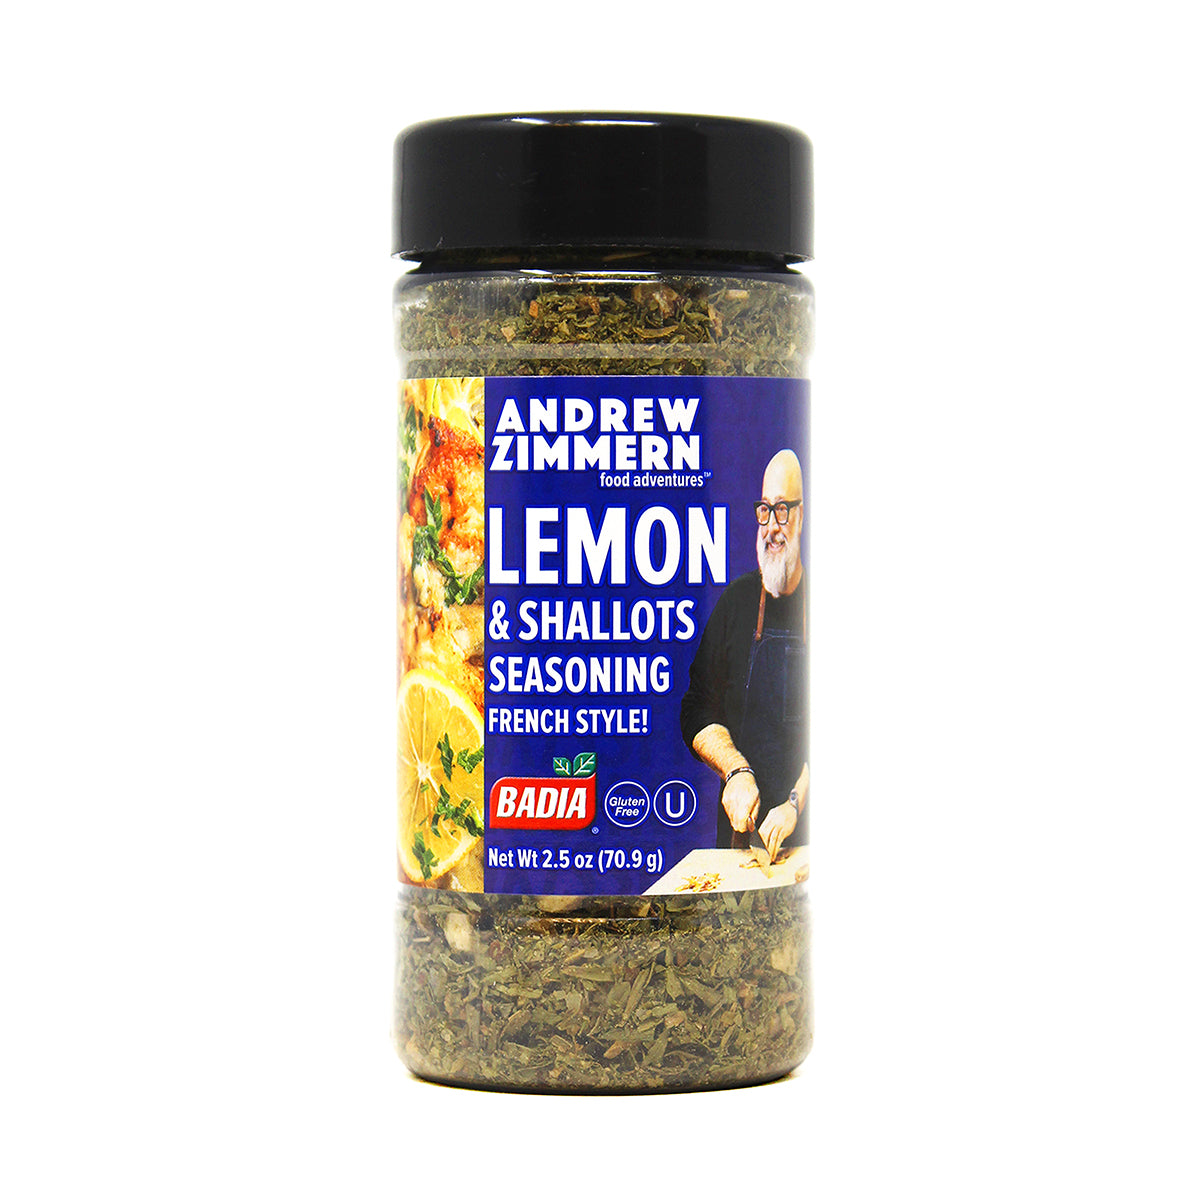 Andrew Zimmern Lemon & Shallots Seasoning - French Style! 2.5oz